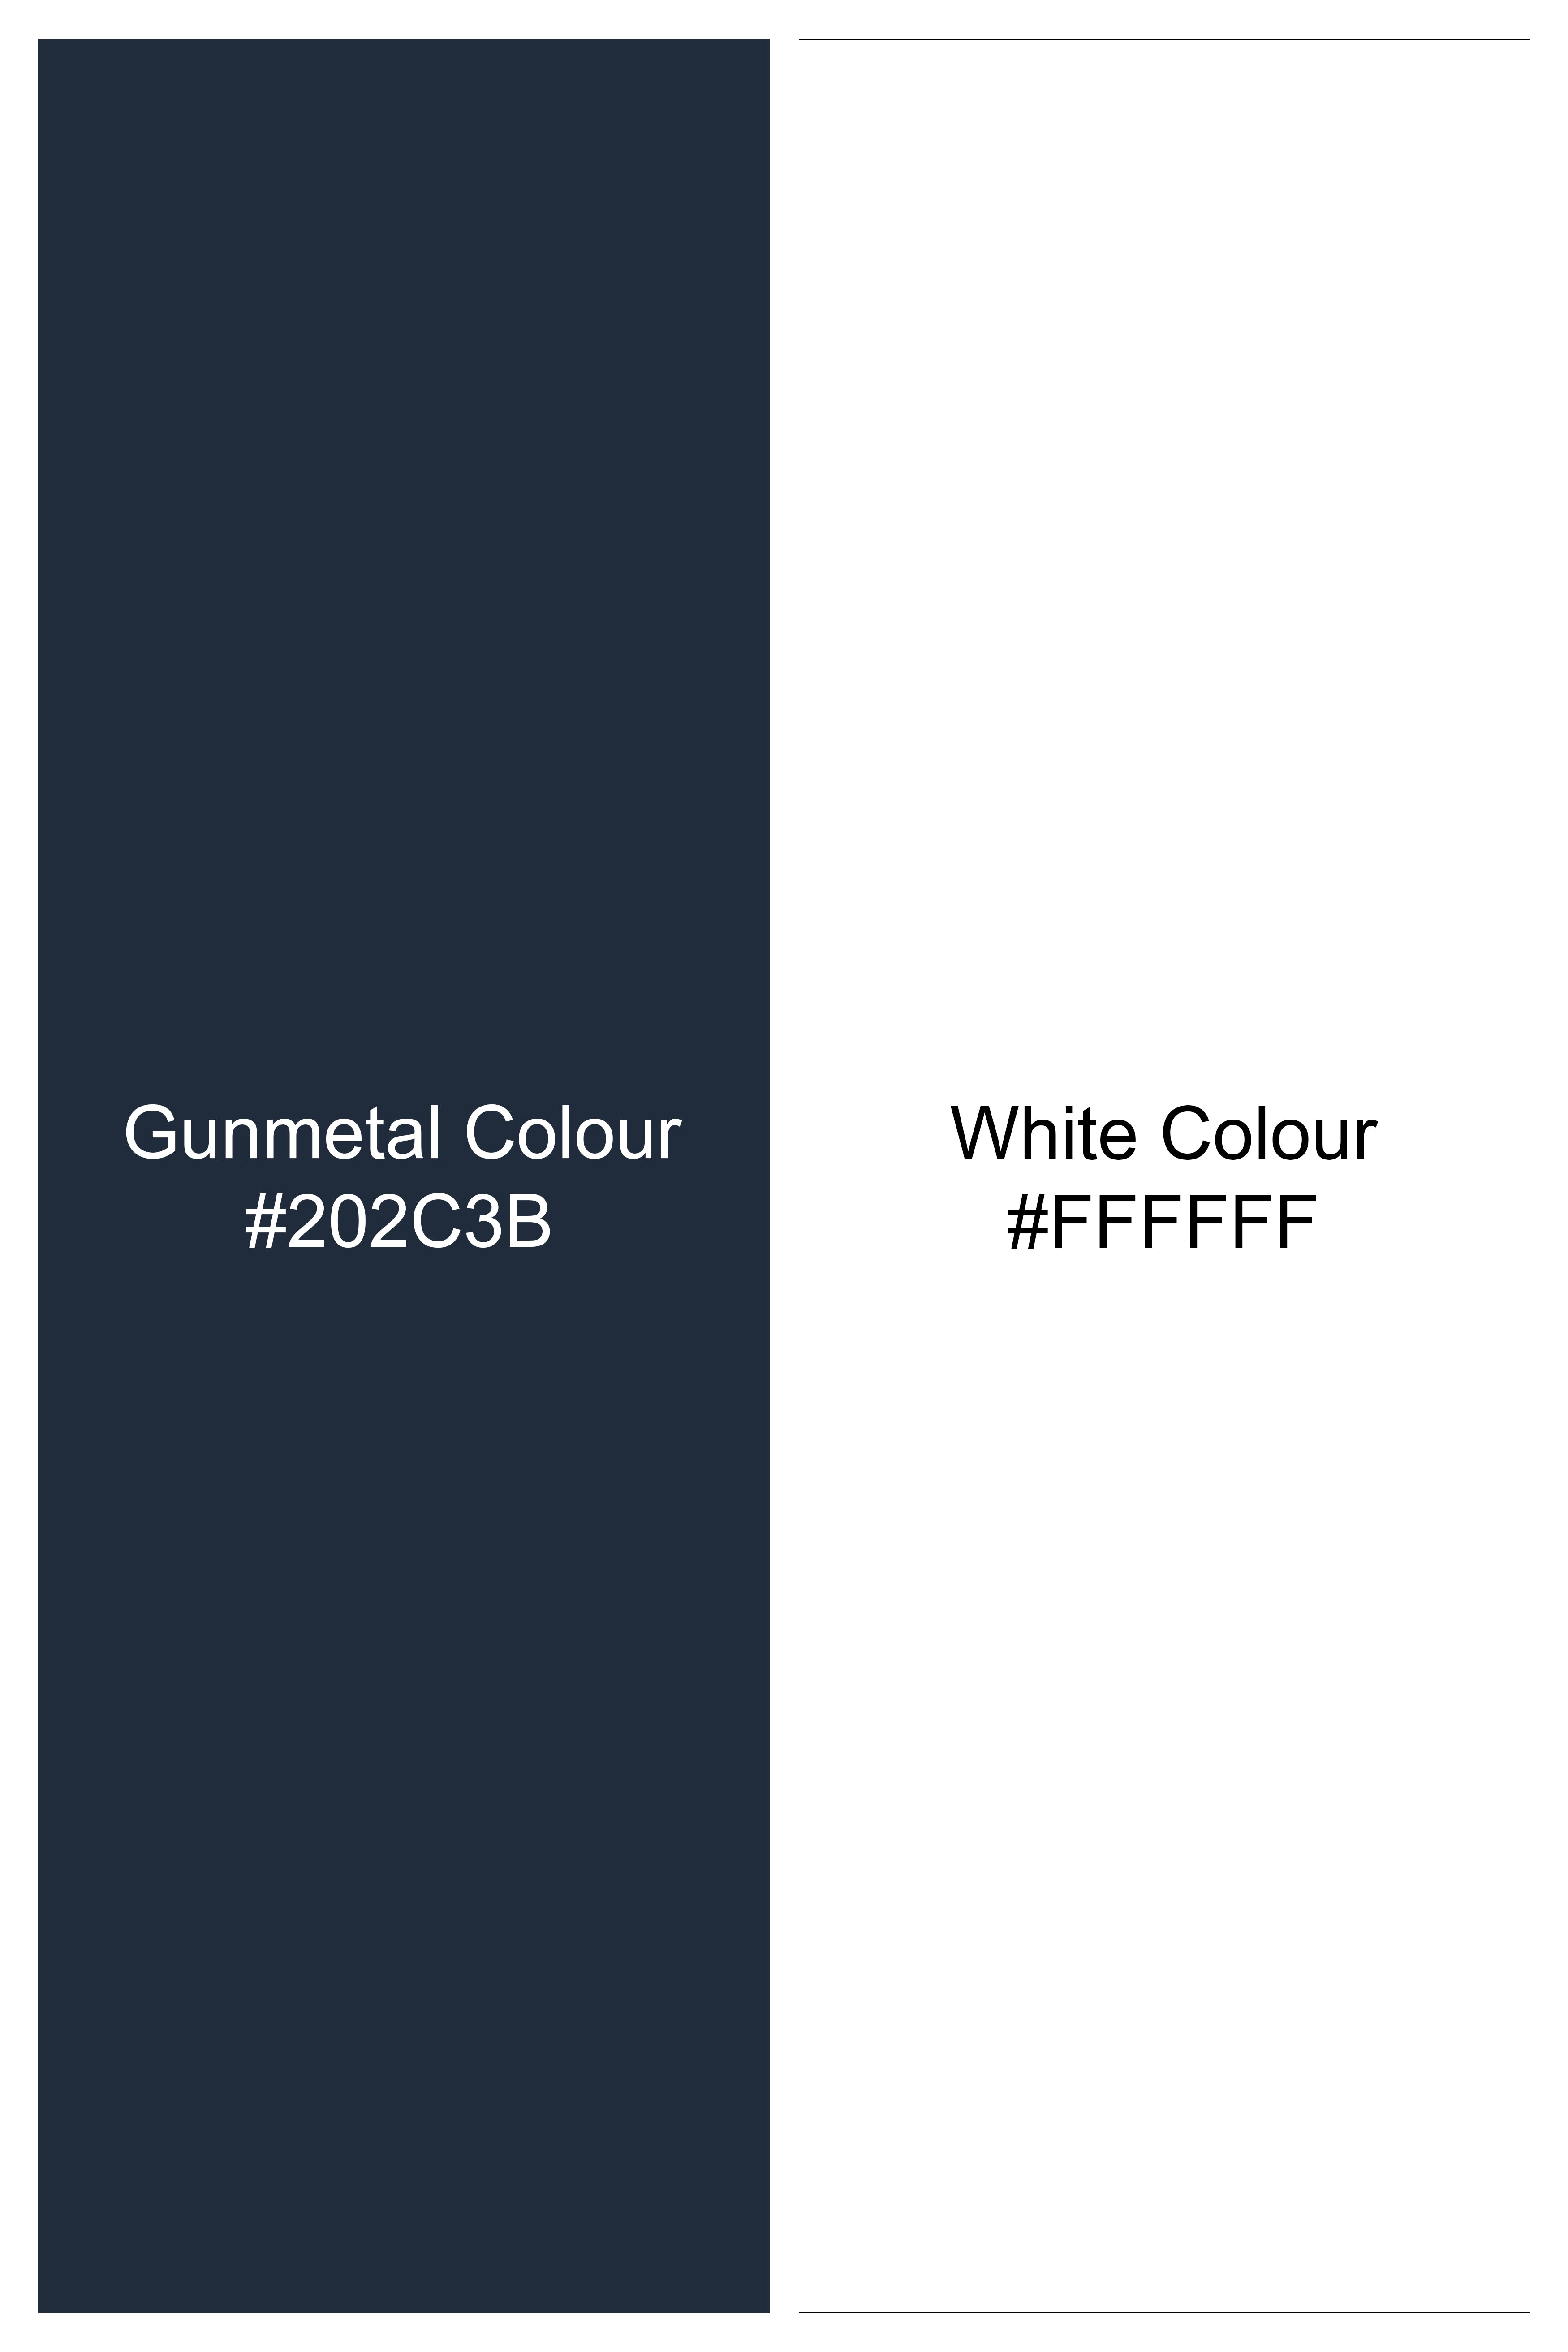 Gunmetal Blue with White Striped Premium Wool Rich Designer Suit ST2772-DB-D481-36, ST2772-DB-D481-38, ST2772-DB-D481-40, ST2772-DB-D481-42, ST2772-DB-D481-44, ST2772-DB-D481-46, ST2772-DB-D481-48, ST2772-DB-D481-50, ST2772-DB-D481-52, ST2772-DB-D481-54, ST2772-DB-D481-56, ST2772-DB-D481-58, ST2772-DB-D481-60